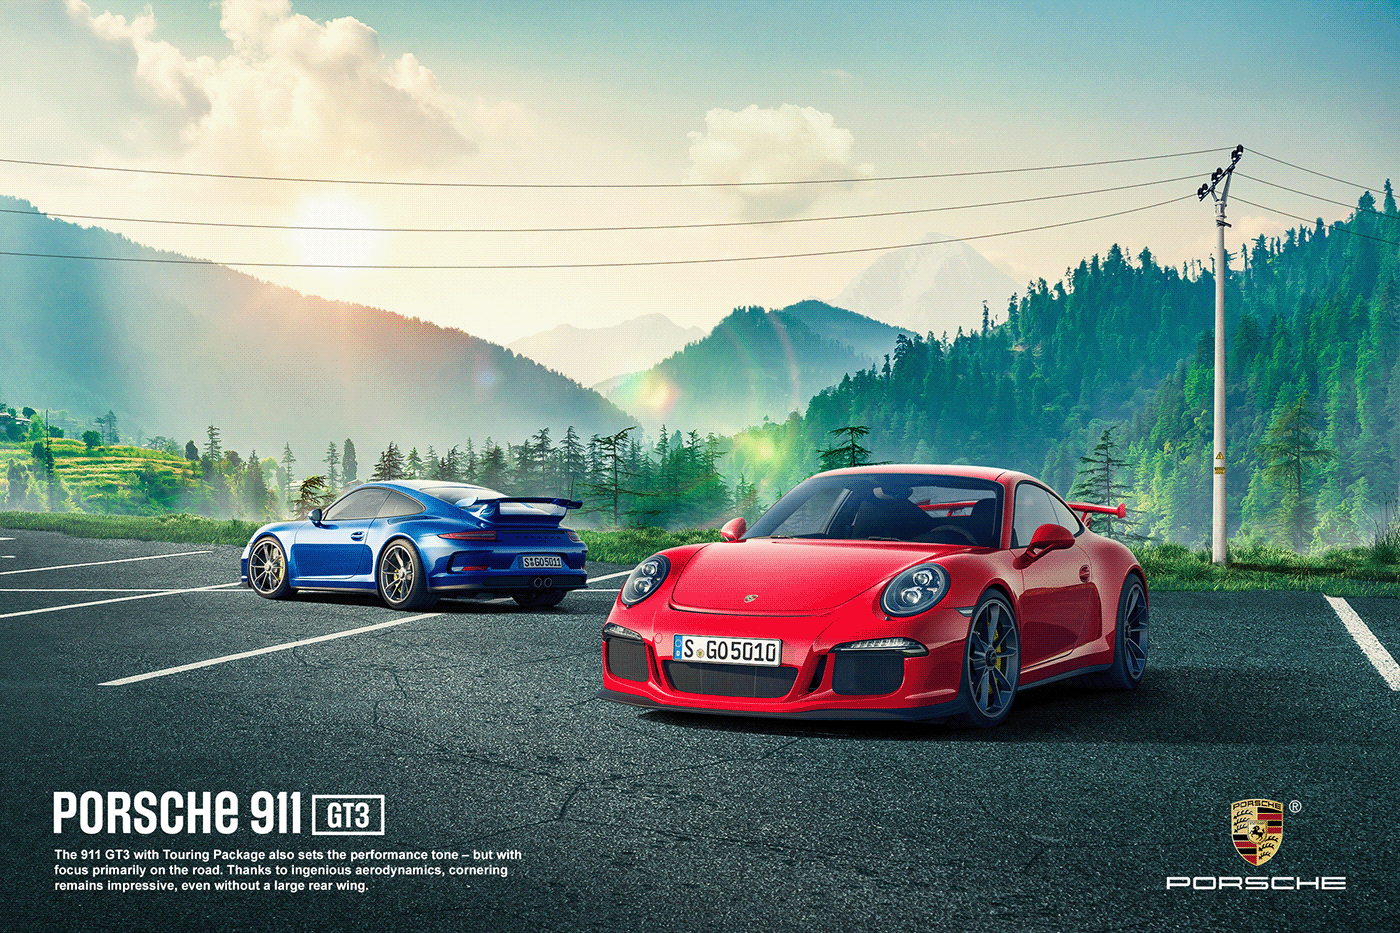 ads automotive   car advertising Digital Art  manipulation Photography  Porsche Post Production retouch visualization